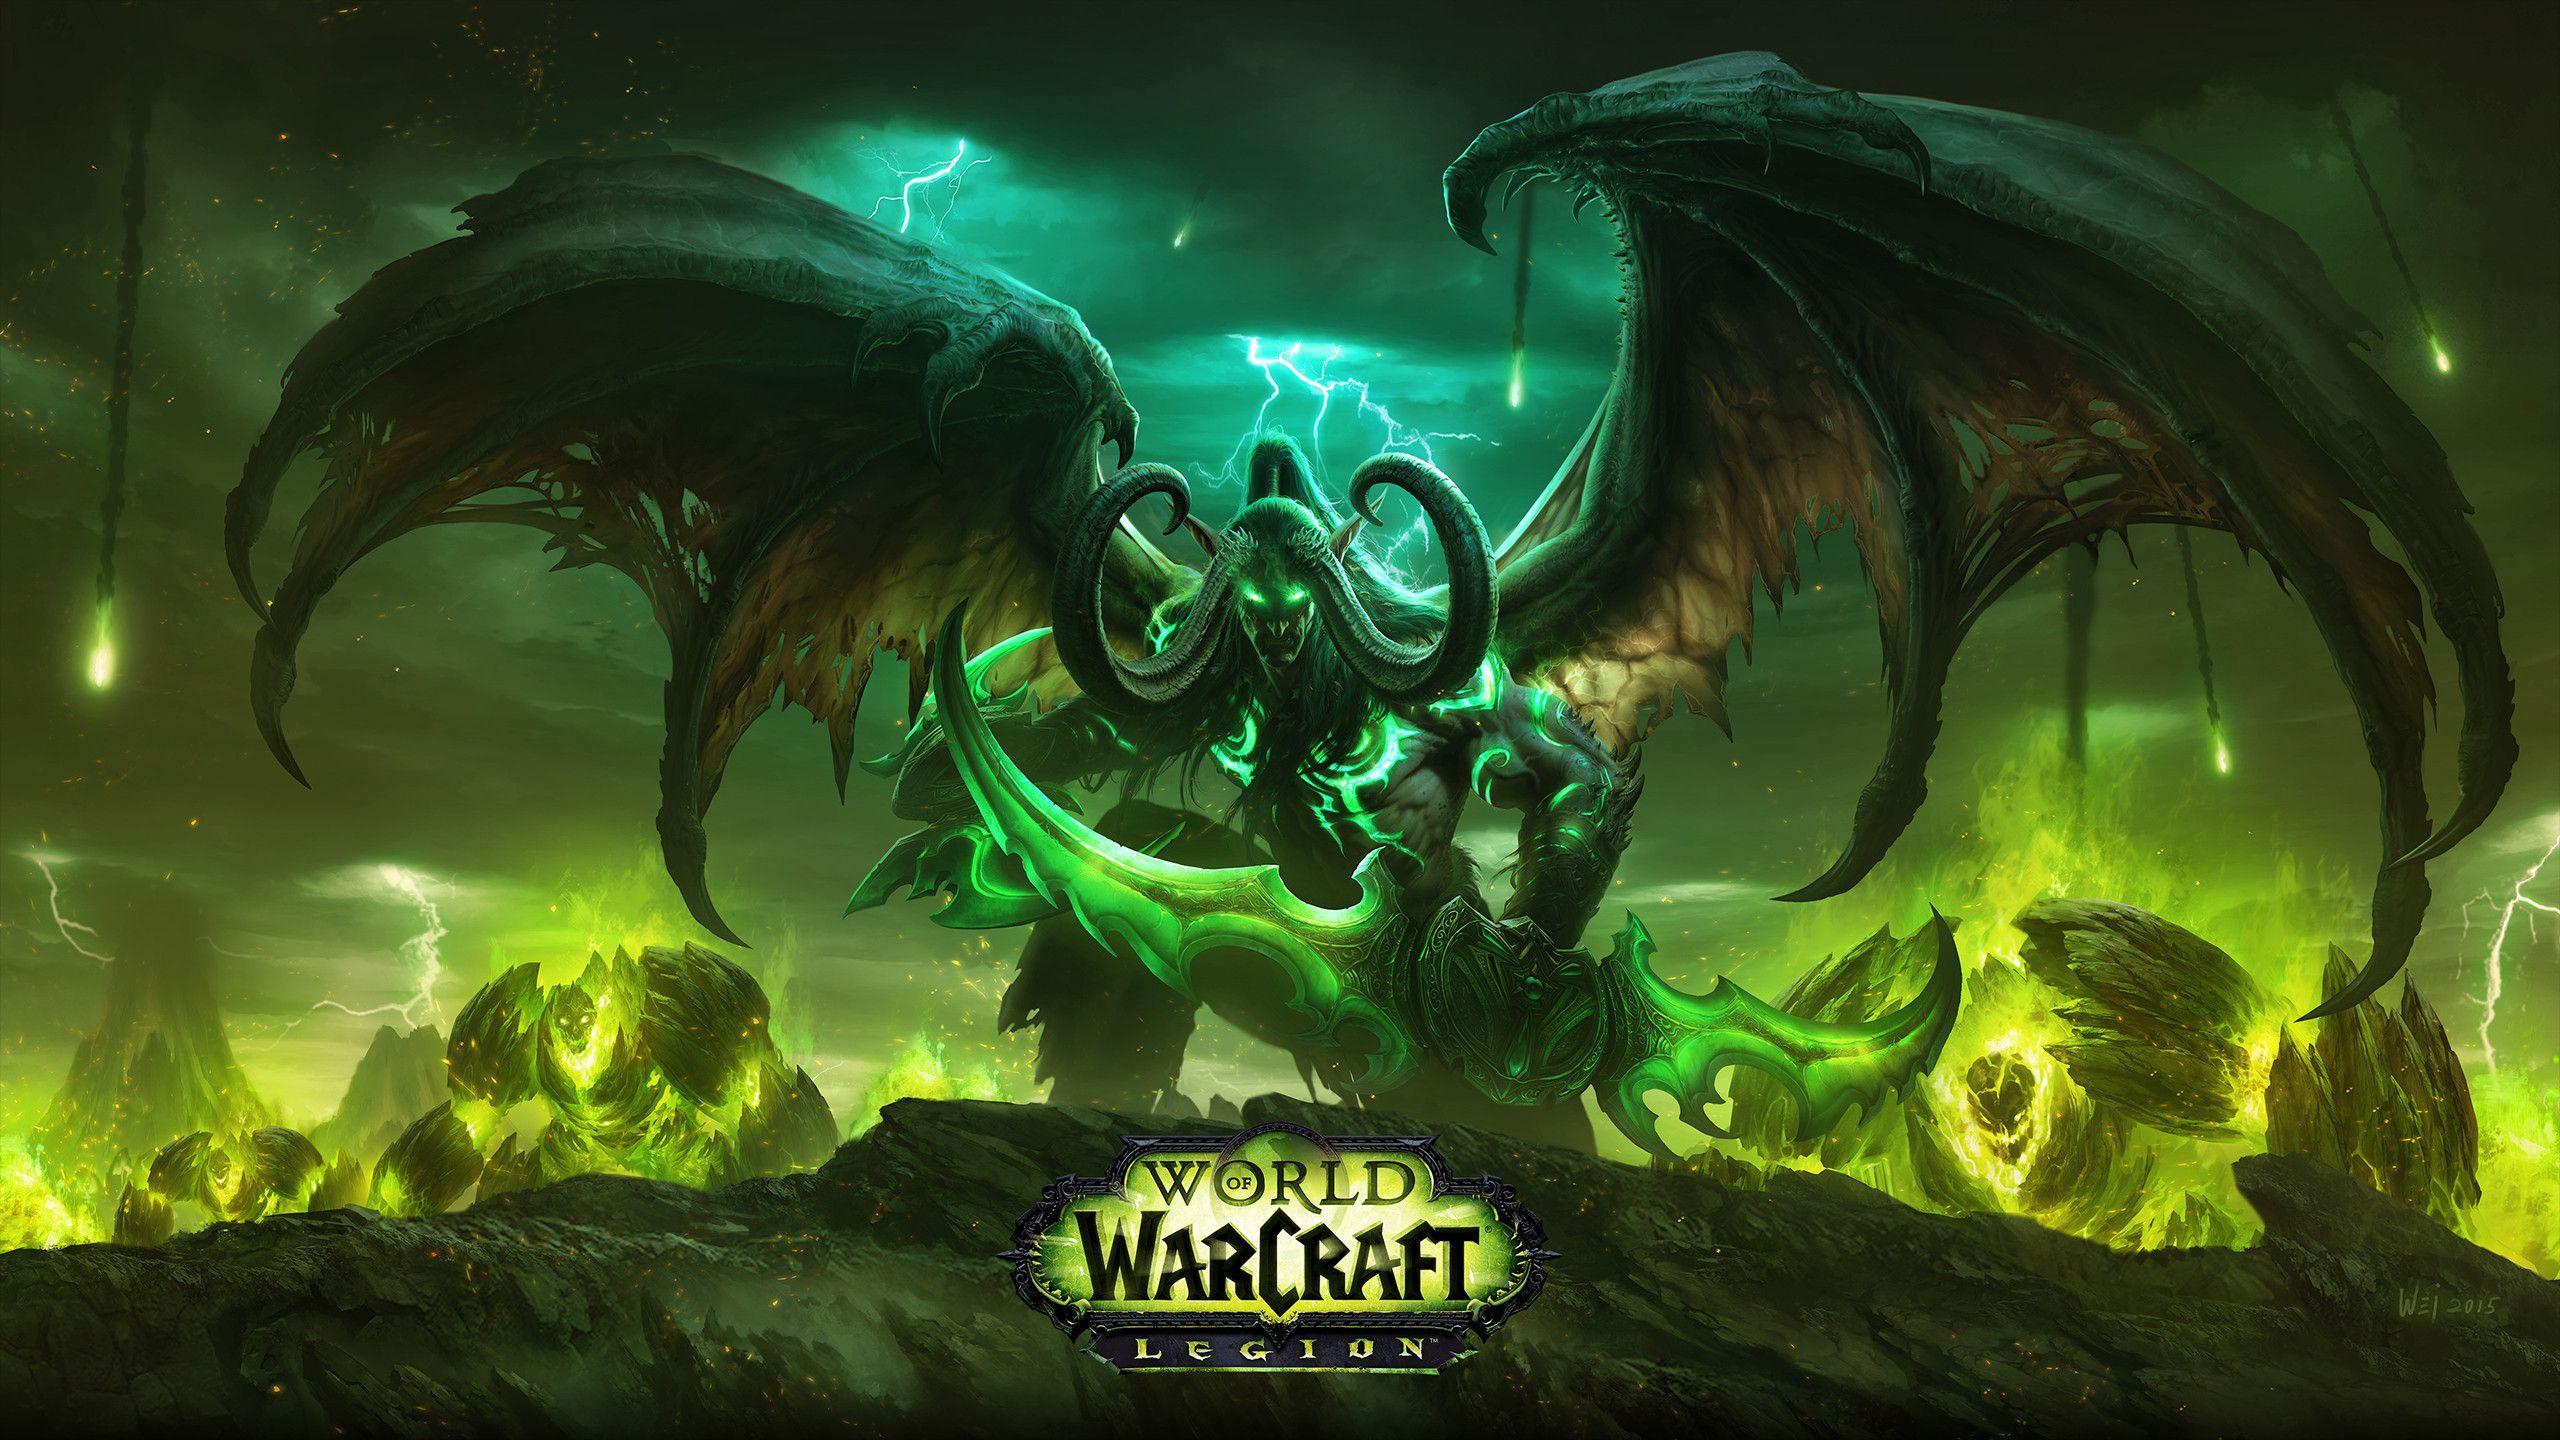 Warcraft Wallpapers Top Free Warcraft Backgrounds Wallpaperaccess Images, Photos, Reviews